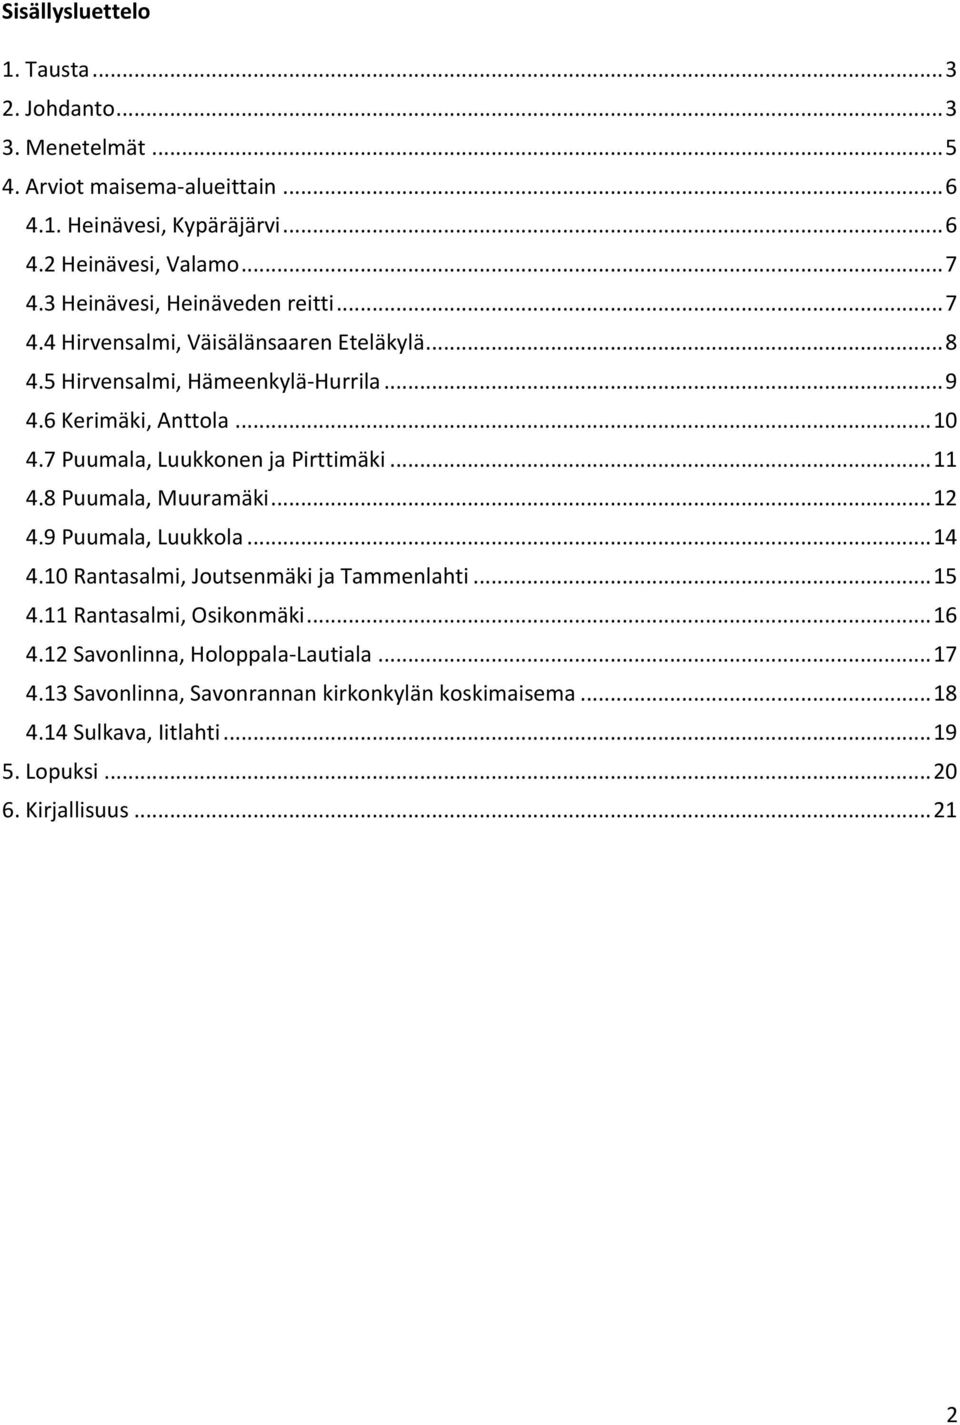 7 Puumala, Luukkonen ja Pirttimäki... 11 4.8 Puumala, Muuramäki... 12 4.9 Puumala, Luukkola... 14 4.10 Rantasalmi, Joutsenmäki ja Tammenlahti... 15 4.